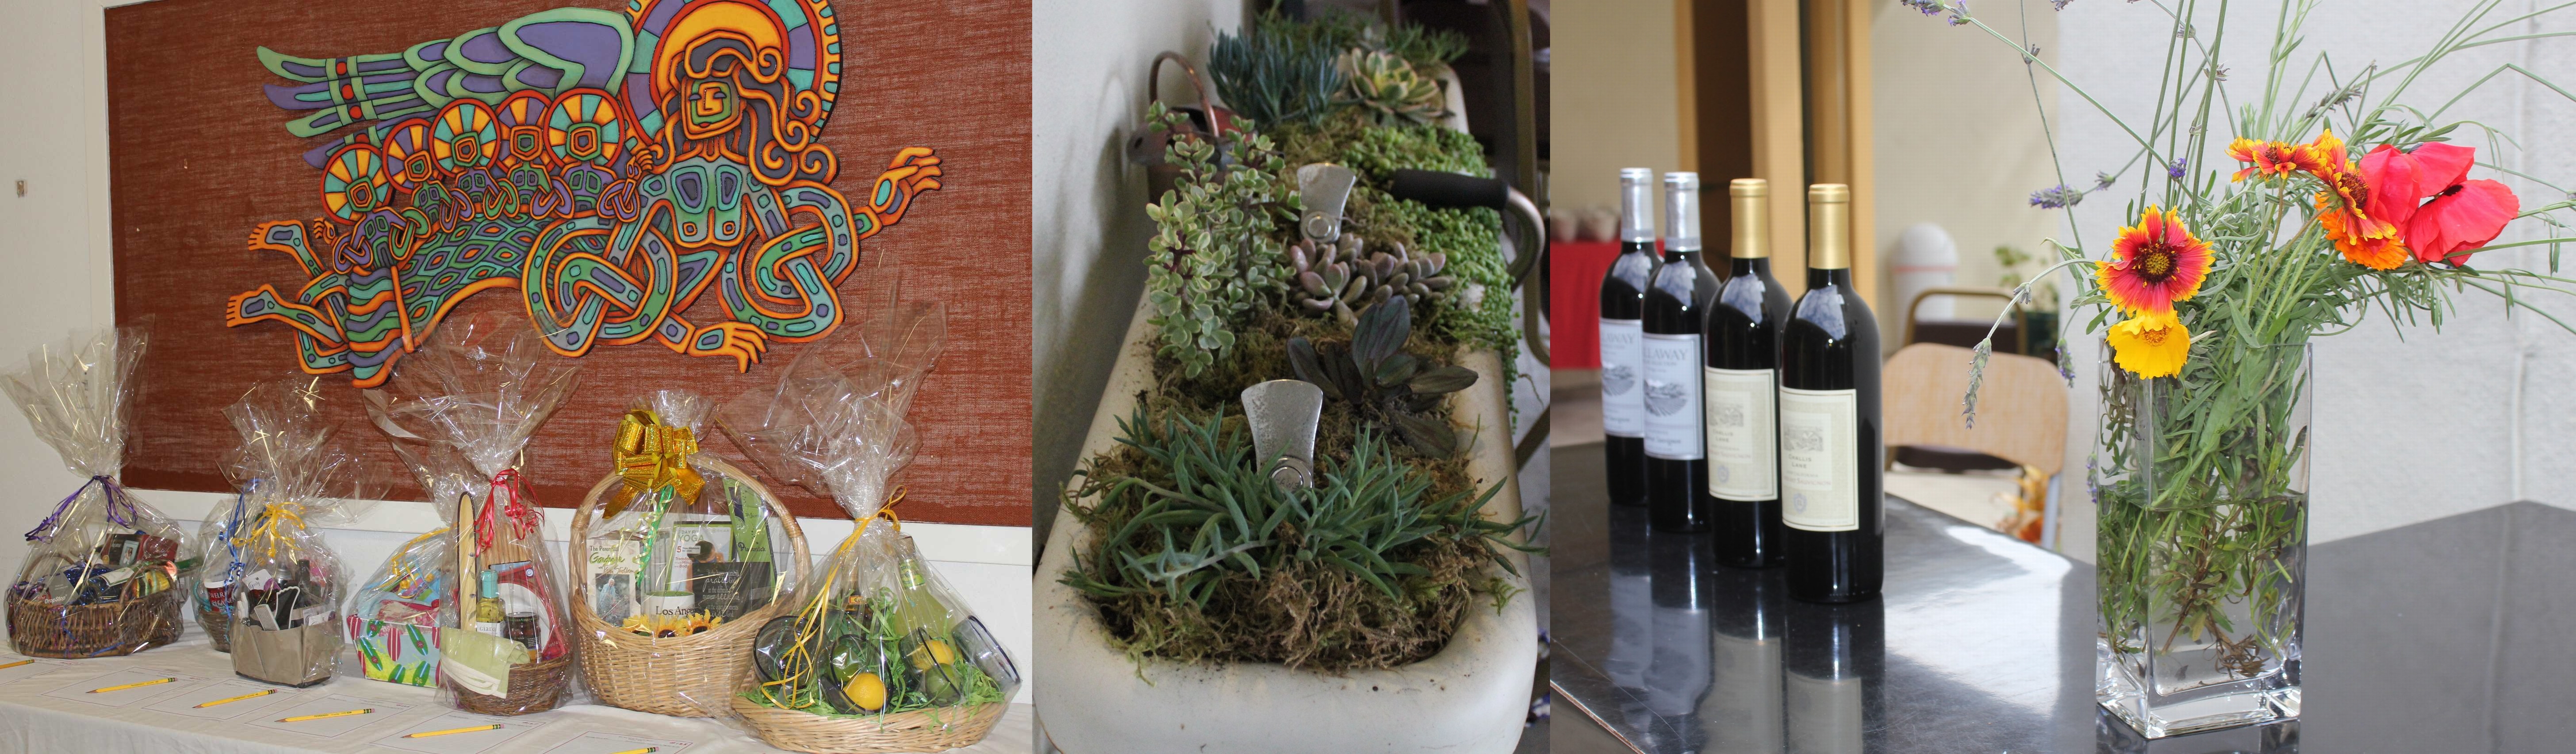 Gift Basket-wine-planter collage 5-11